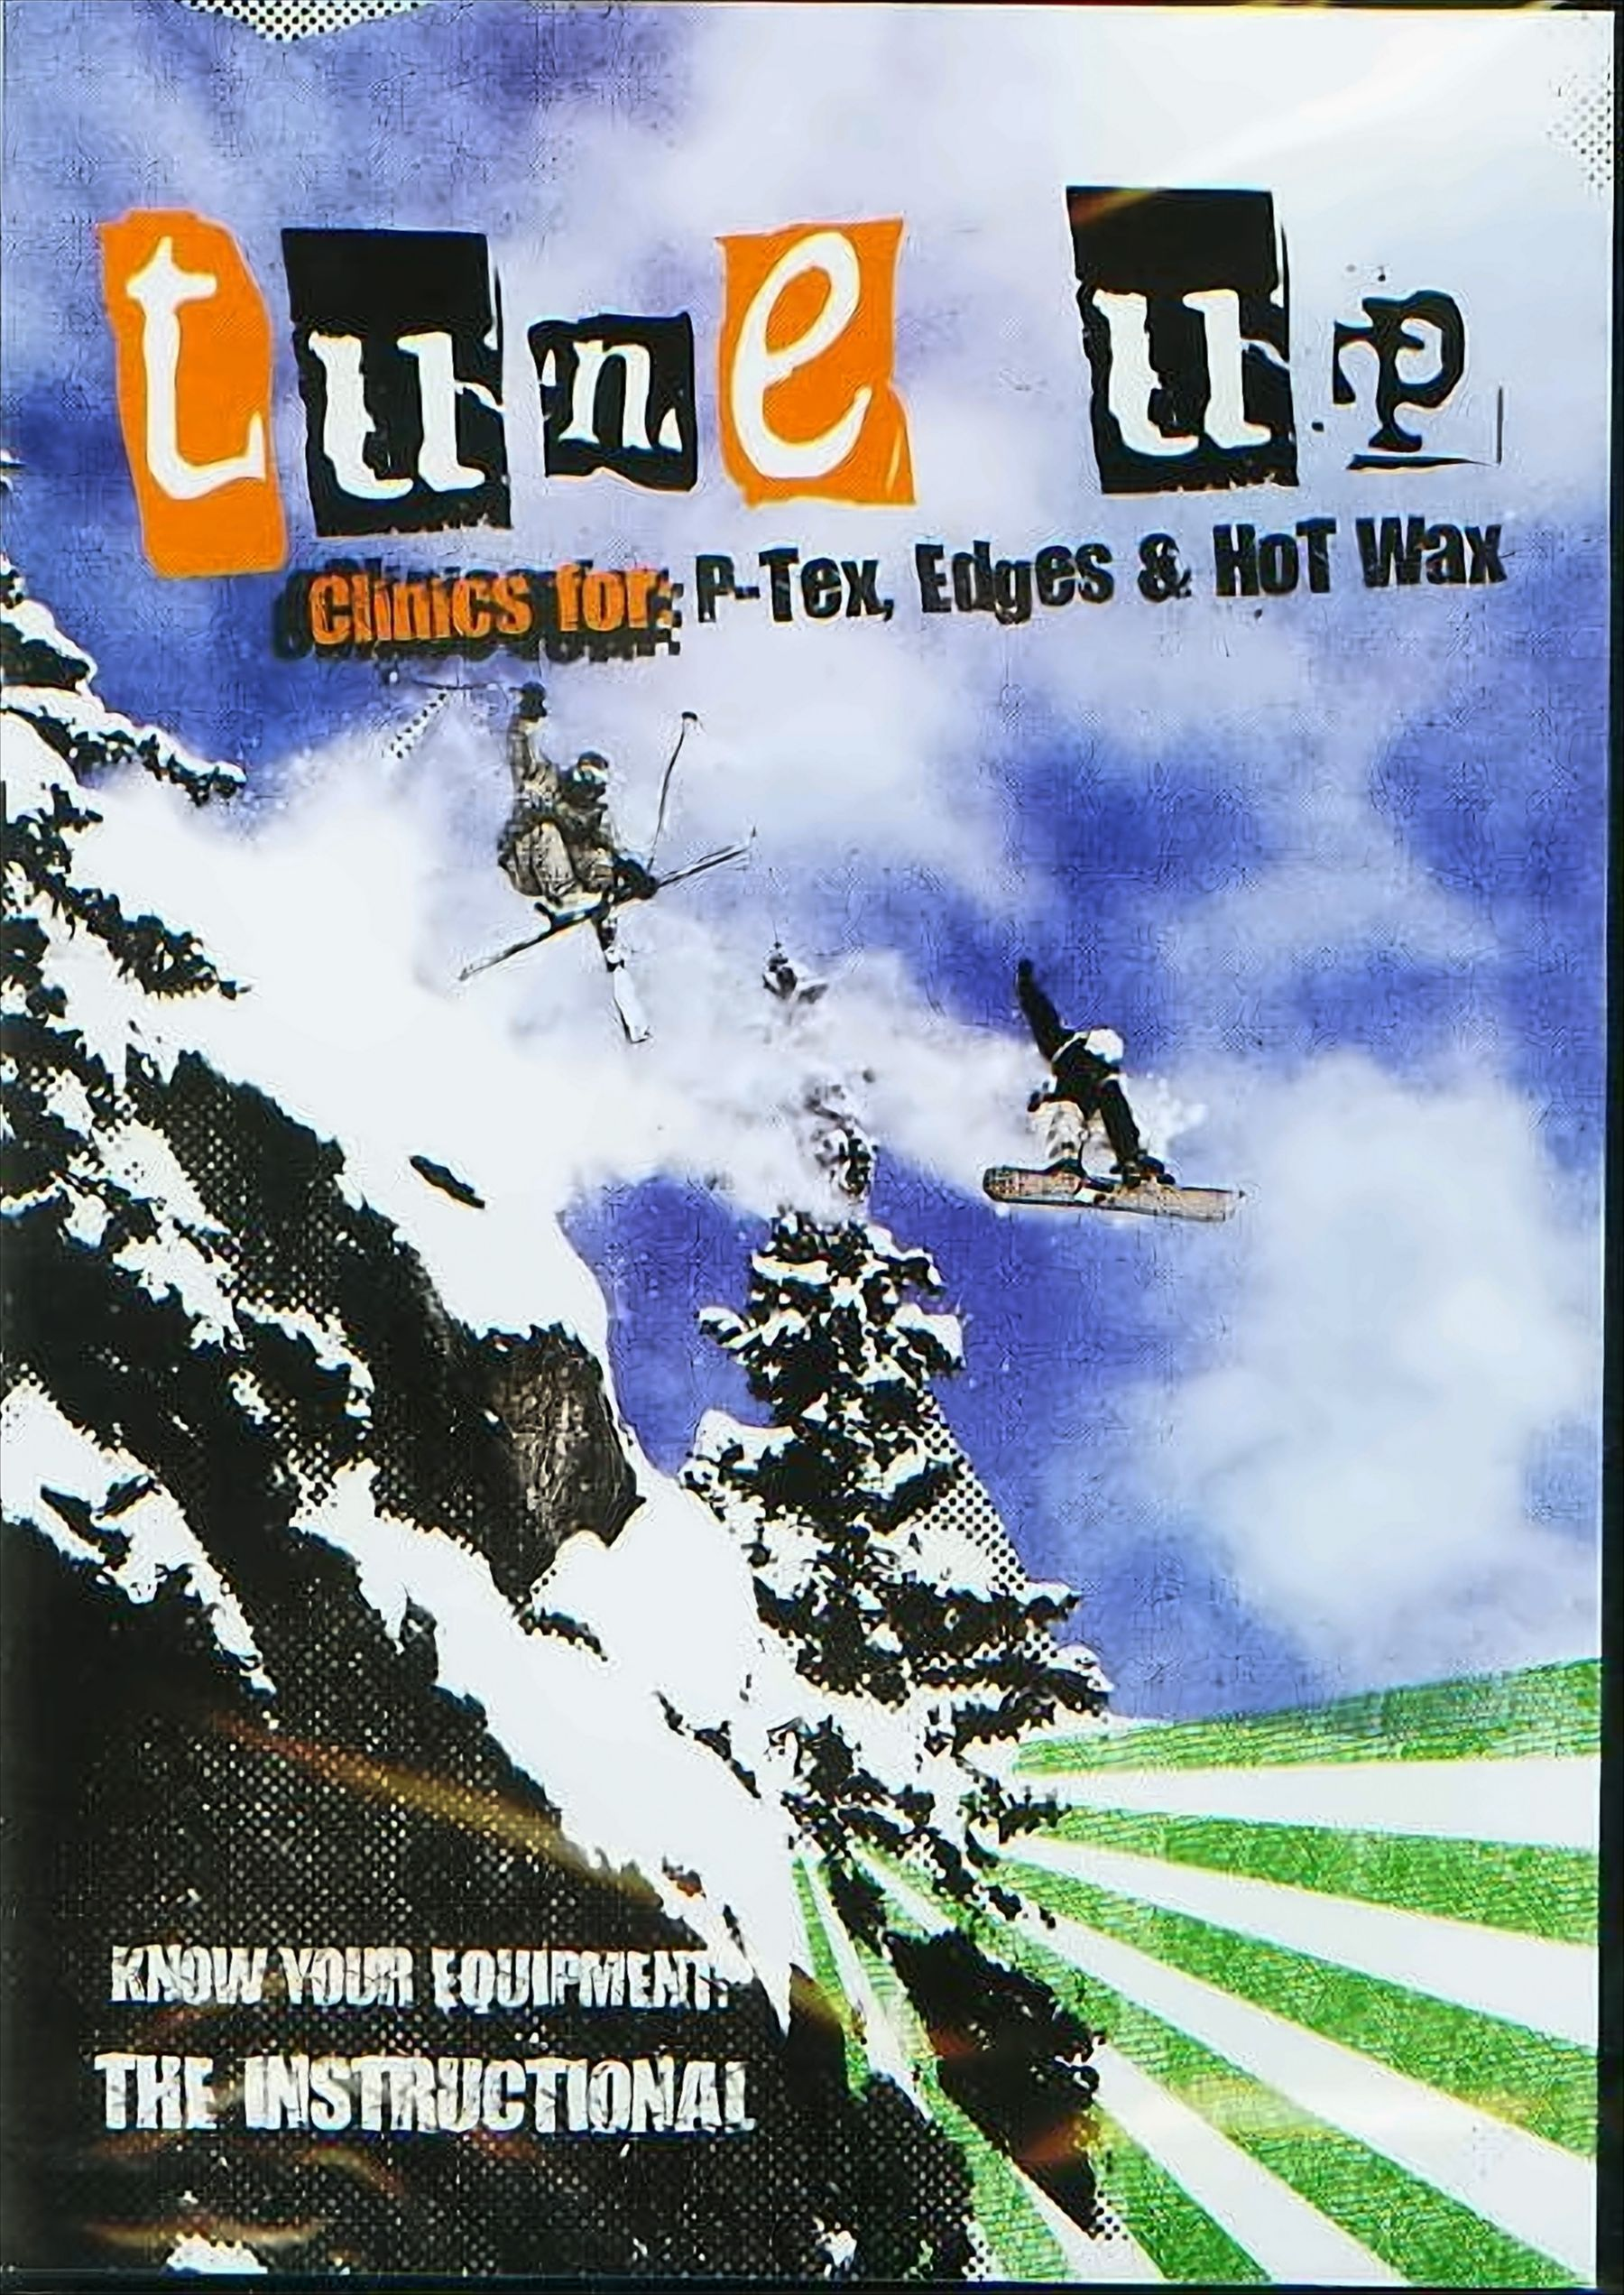 Hot Tune Edges P-Tex, Wax DVD up, for: + Clinics